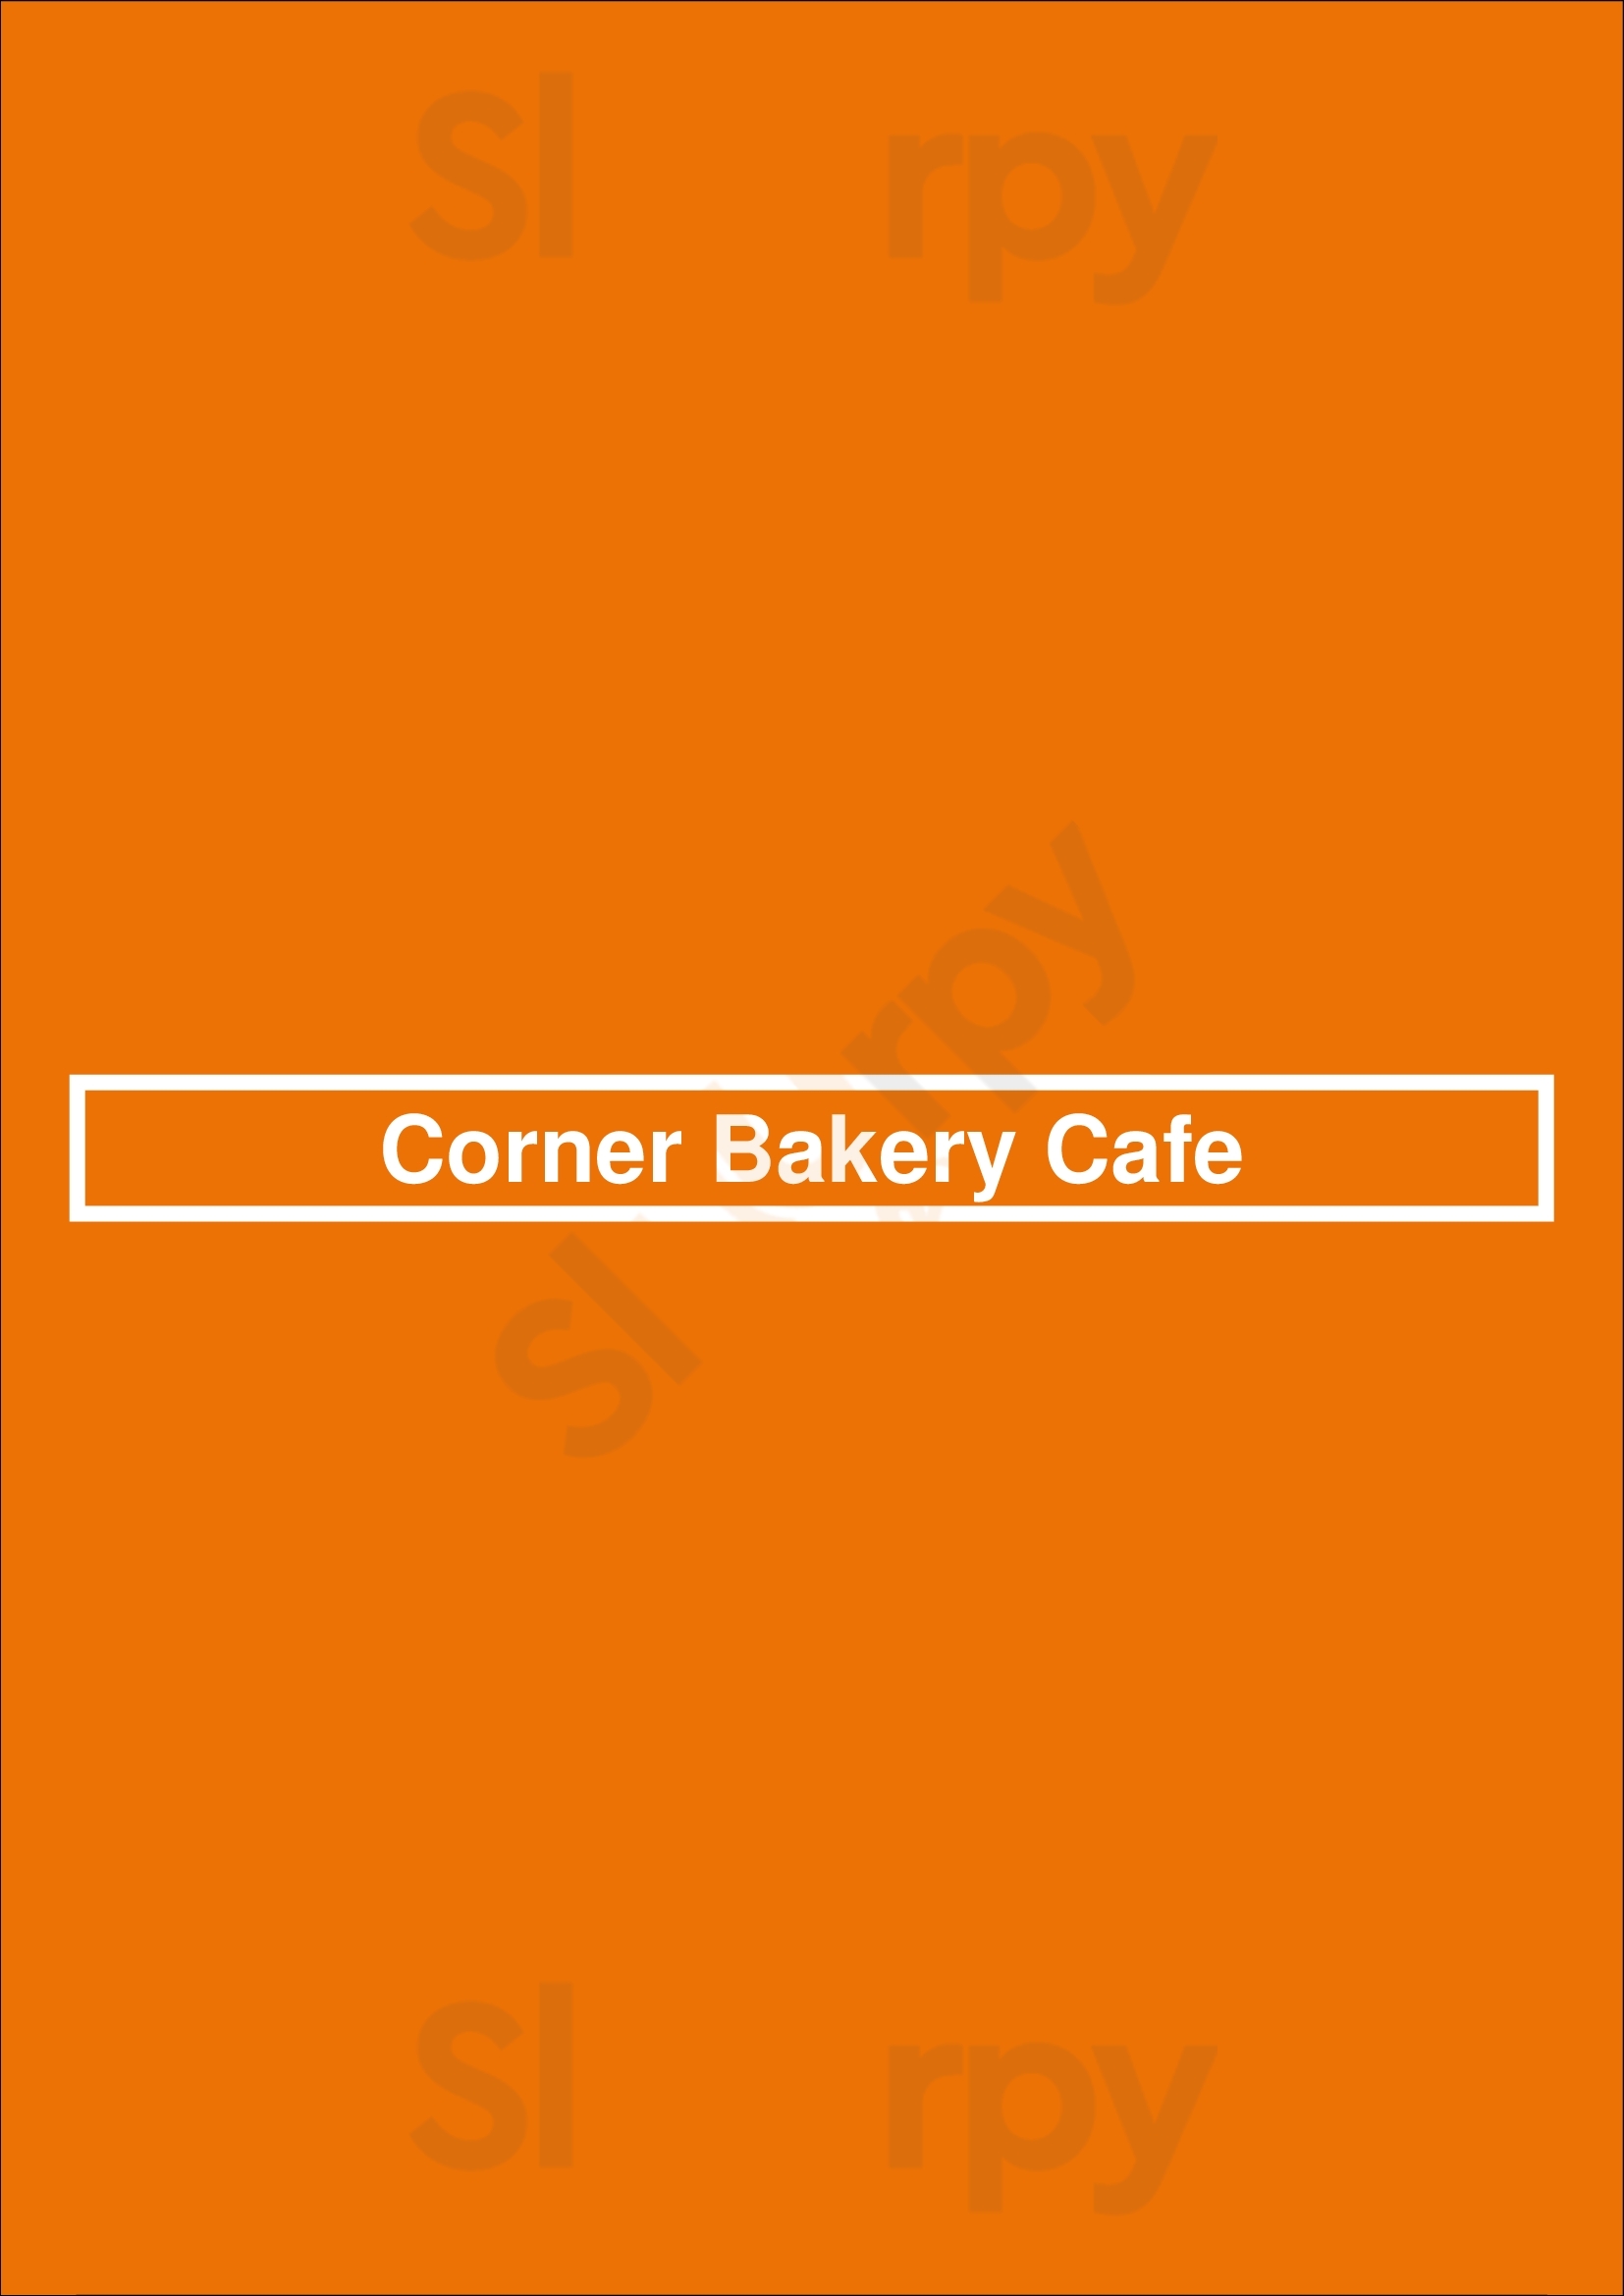 Corner Bakery Cafe Long Beach Menu - 1